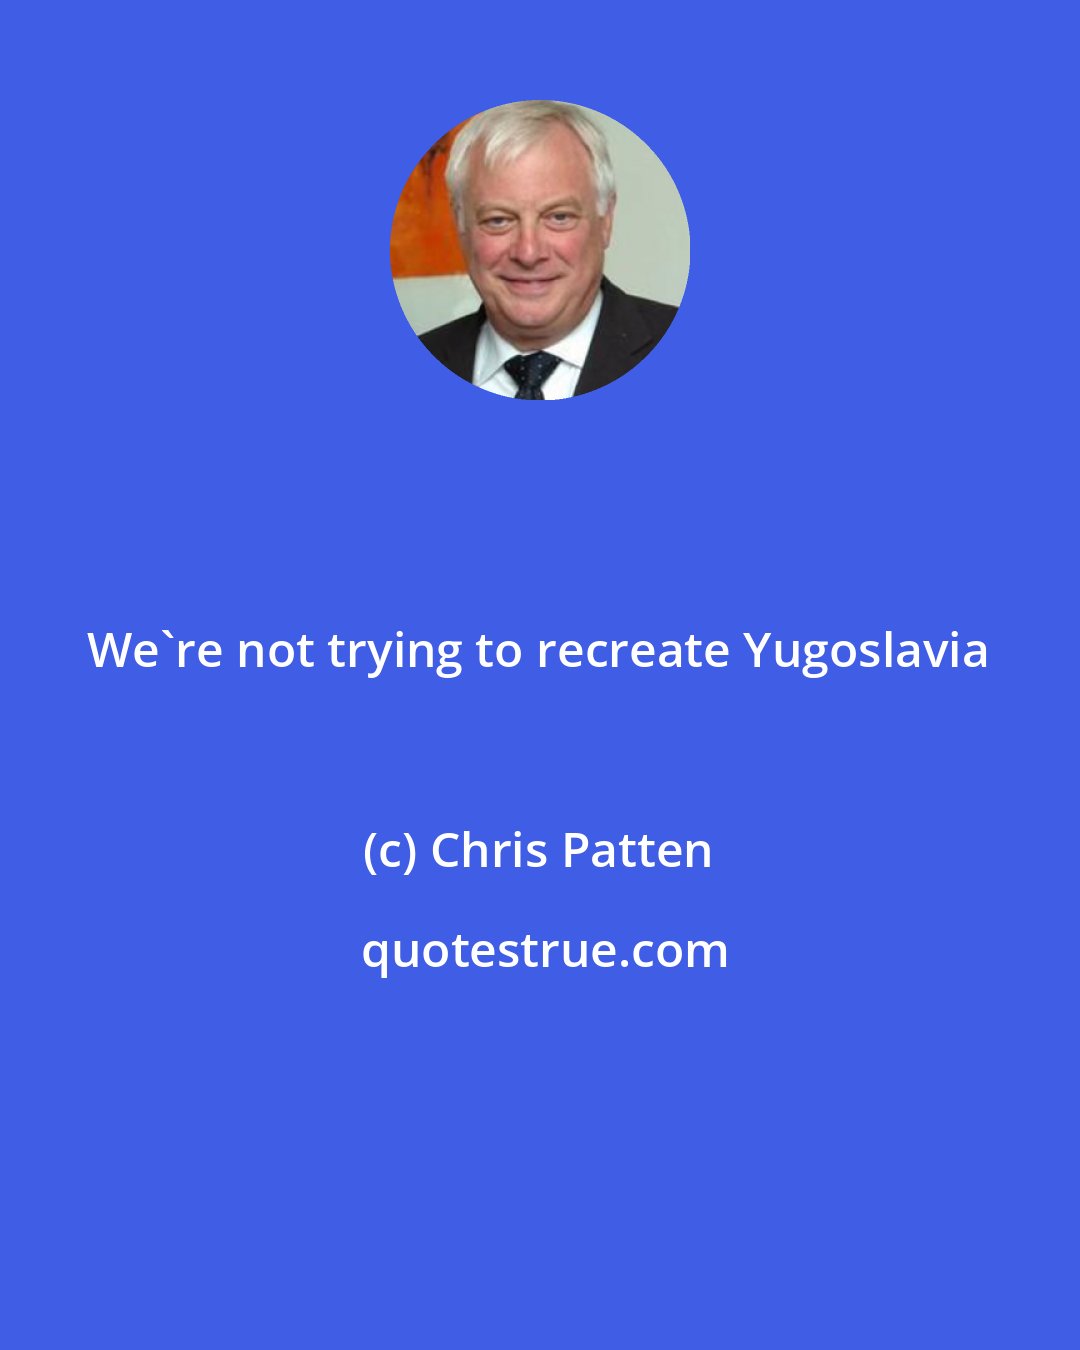 Chris Patten: We're not trying to recreate Yugoslavia